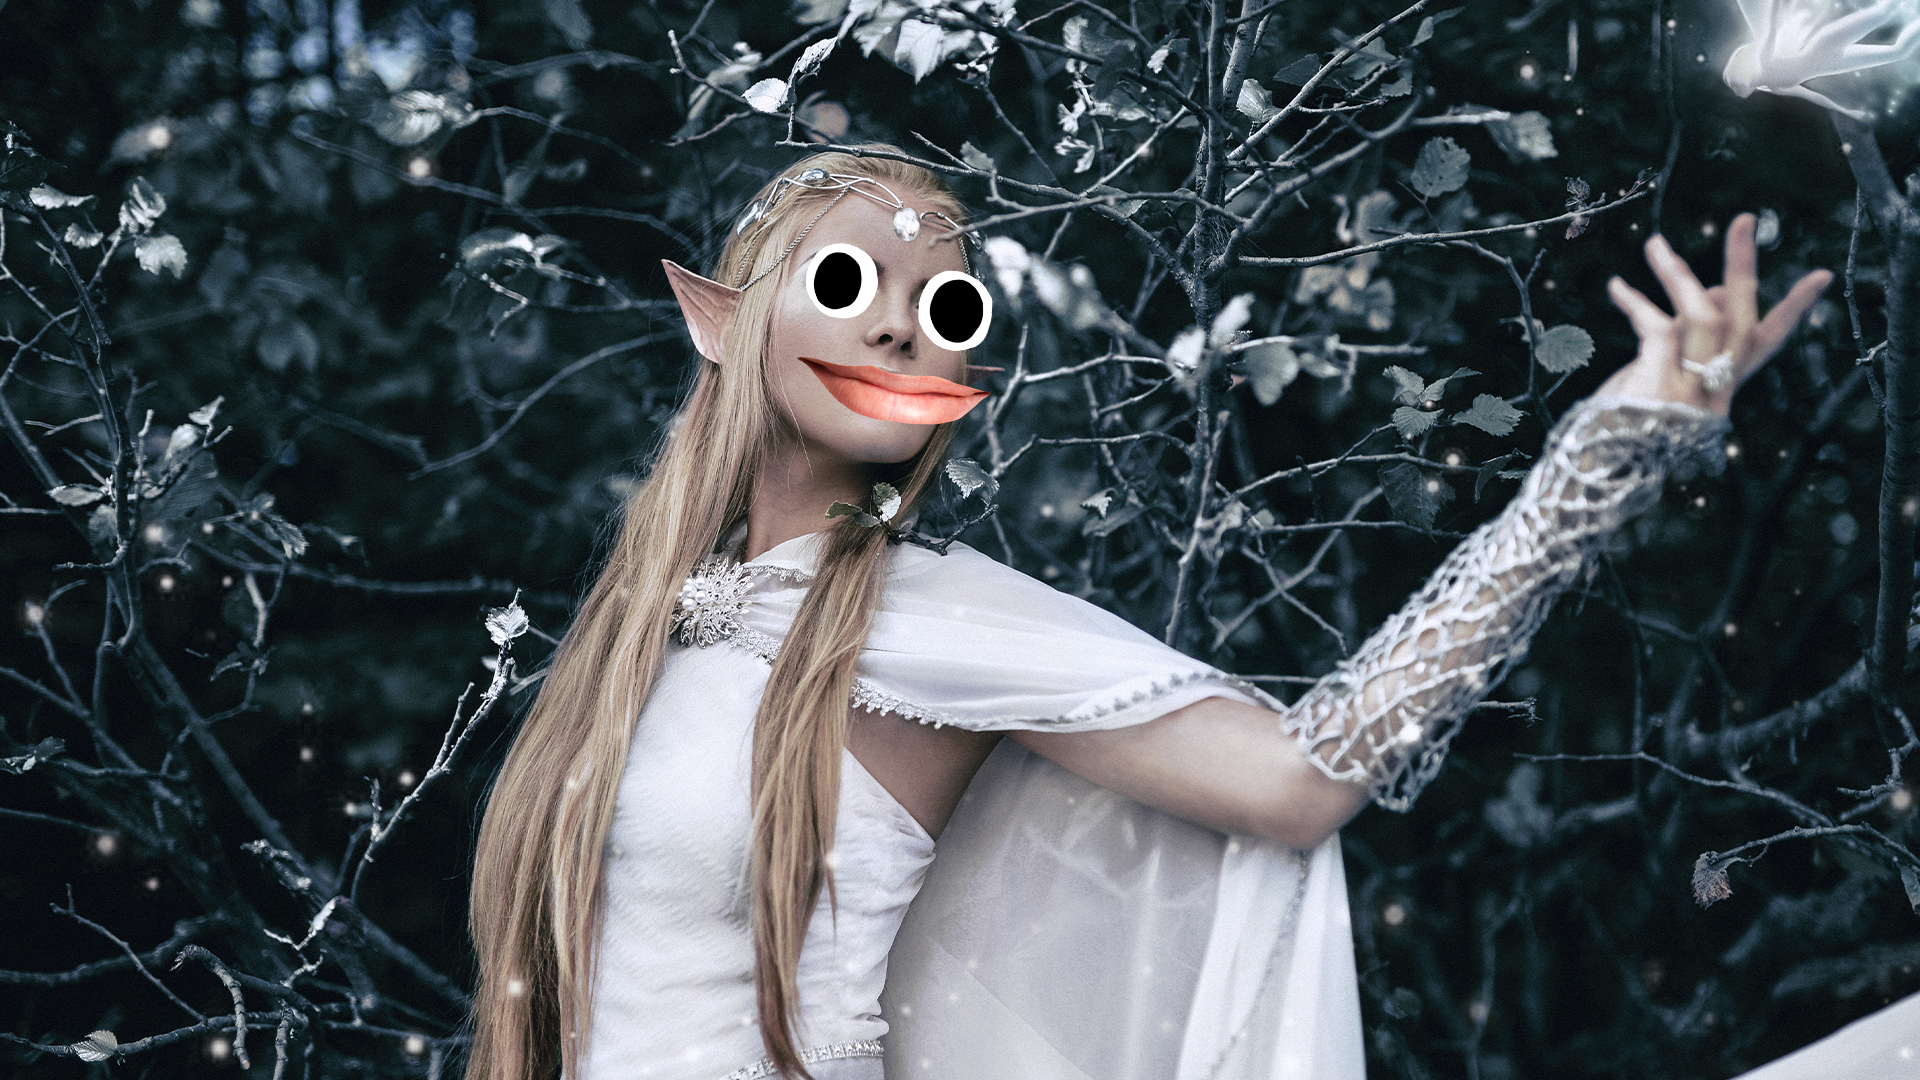 An elf lady